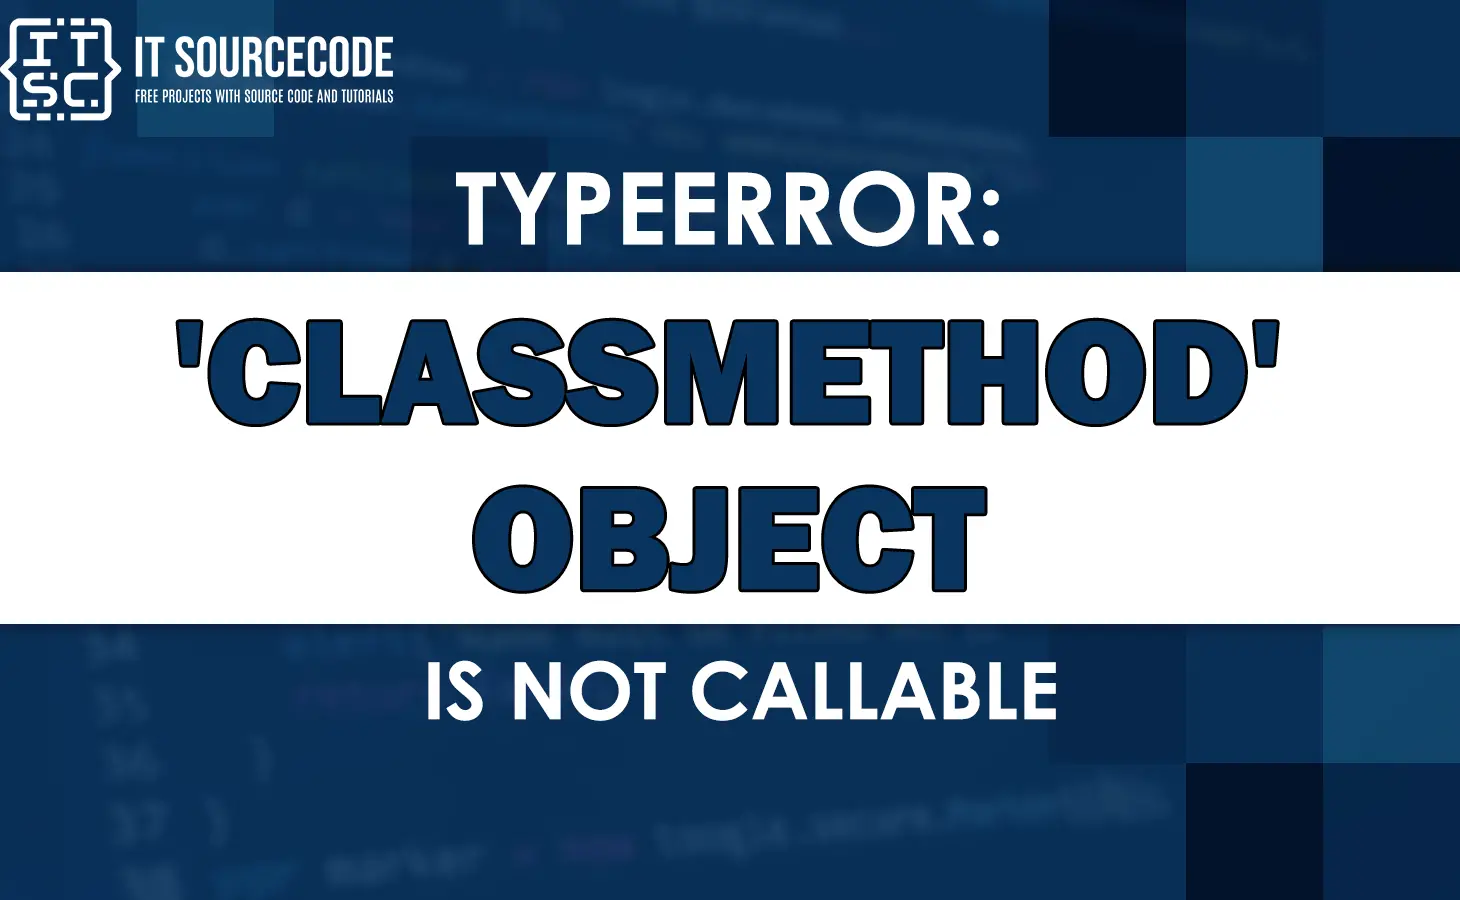 typeerror: 'classmethod' object is not callable